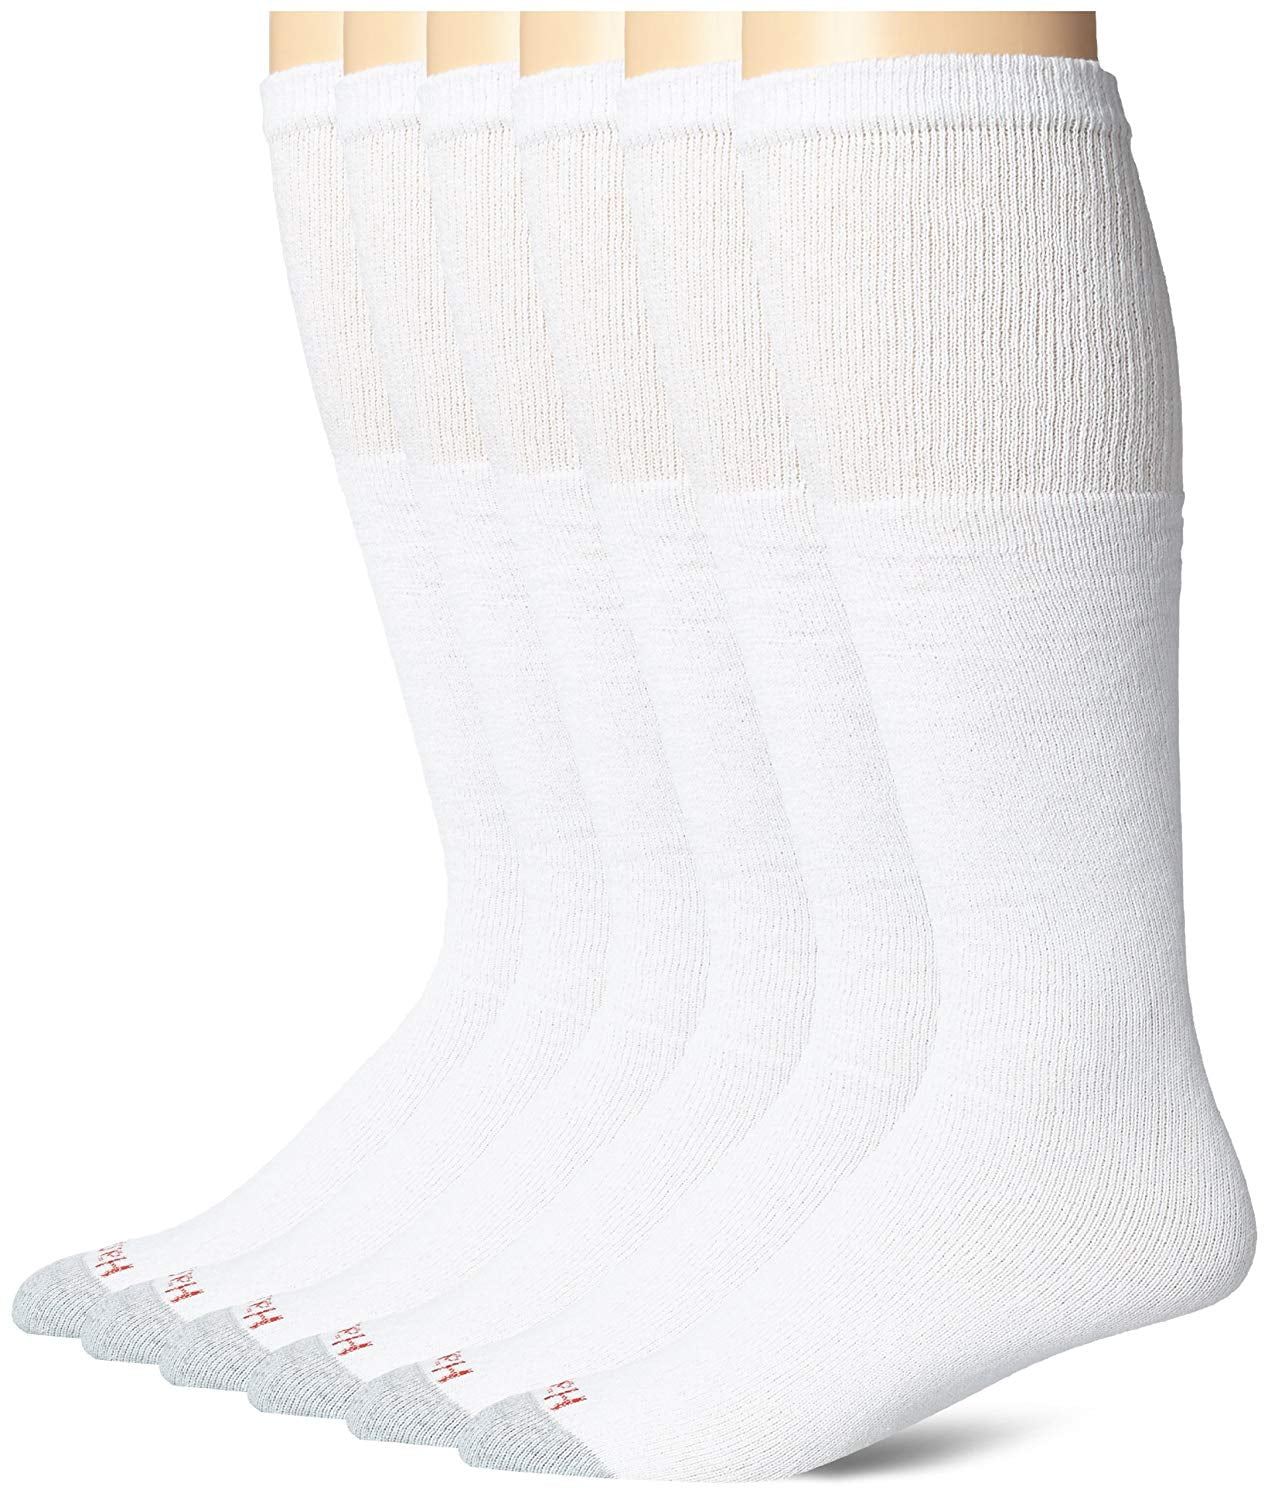 Justwhiteshirts Burnt Brown Fine-rib Mid-calf Mercerized Cotton Socks Sizes 8-13 